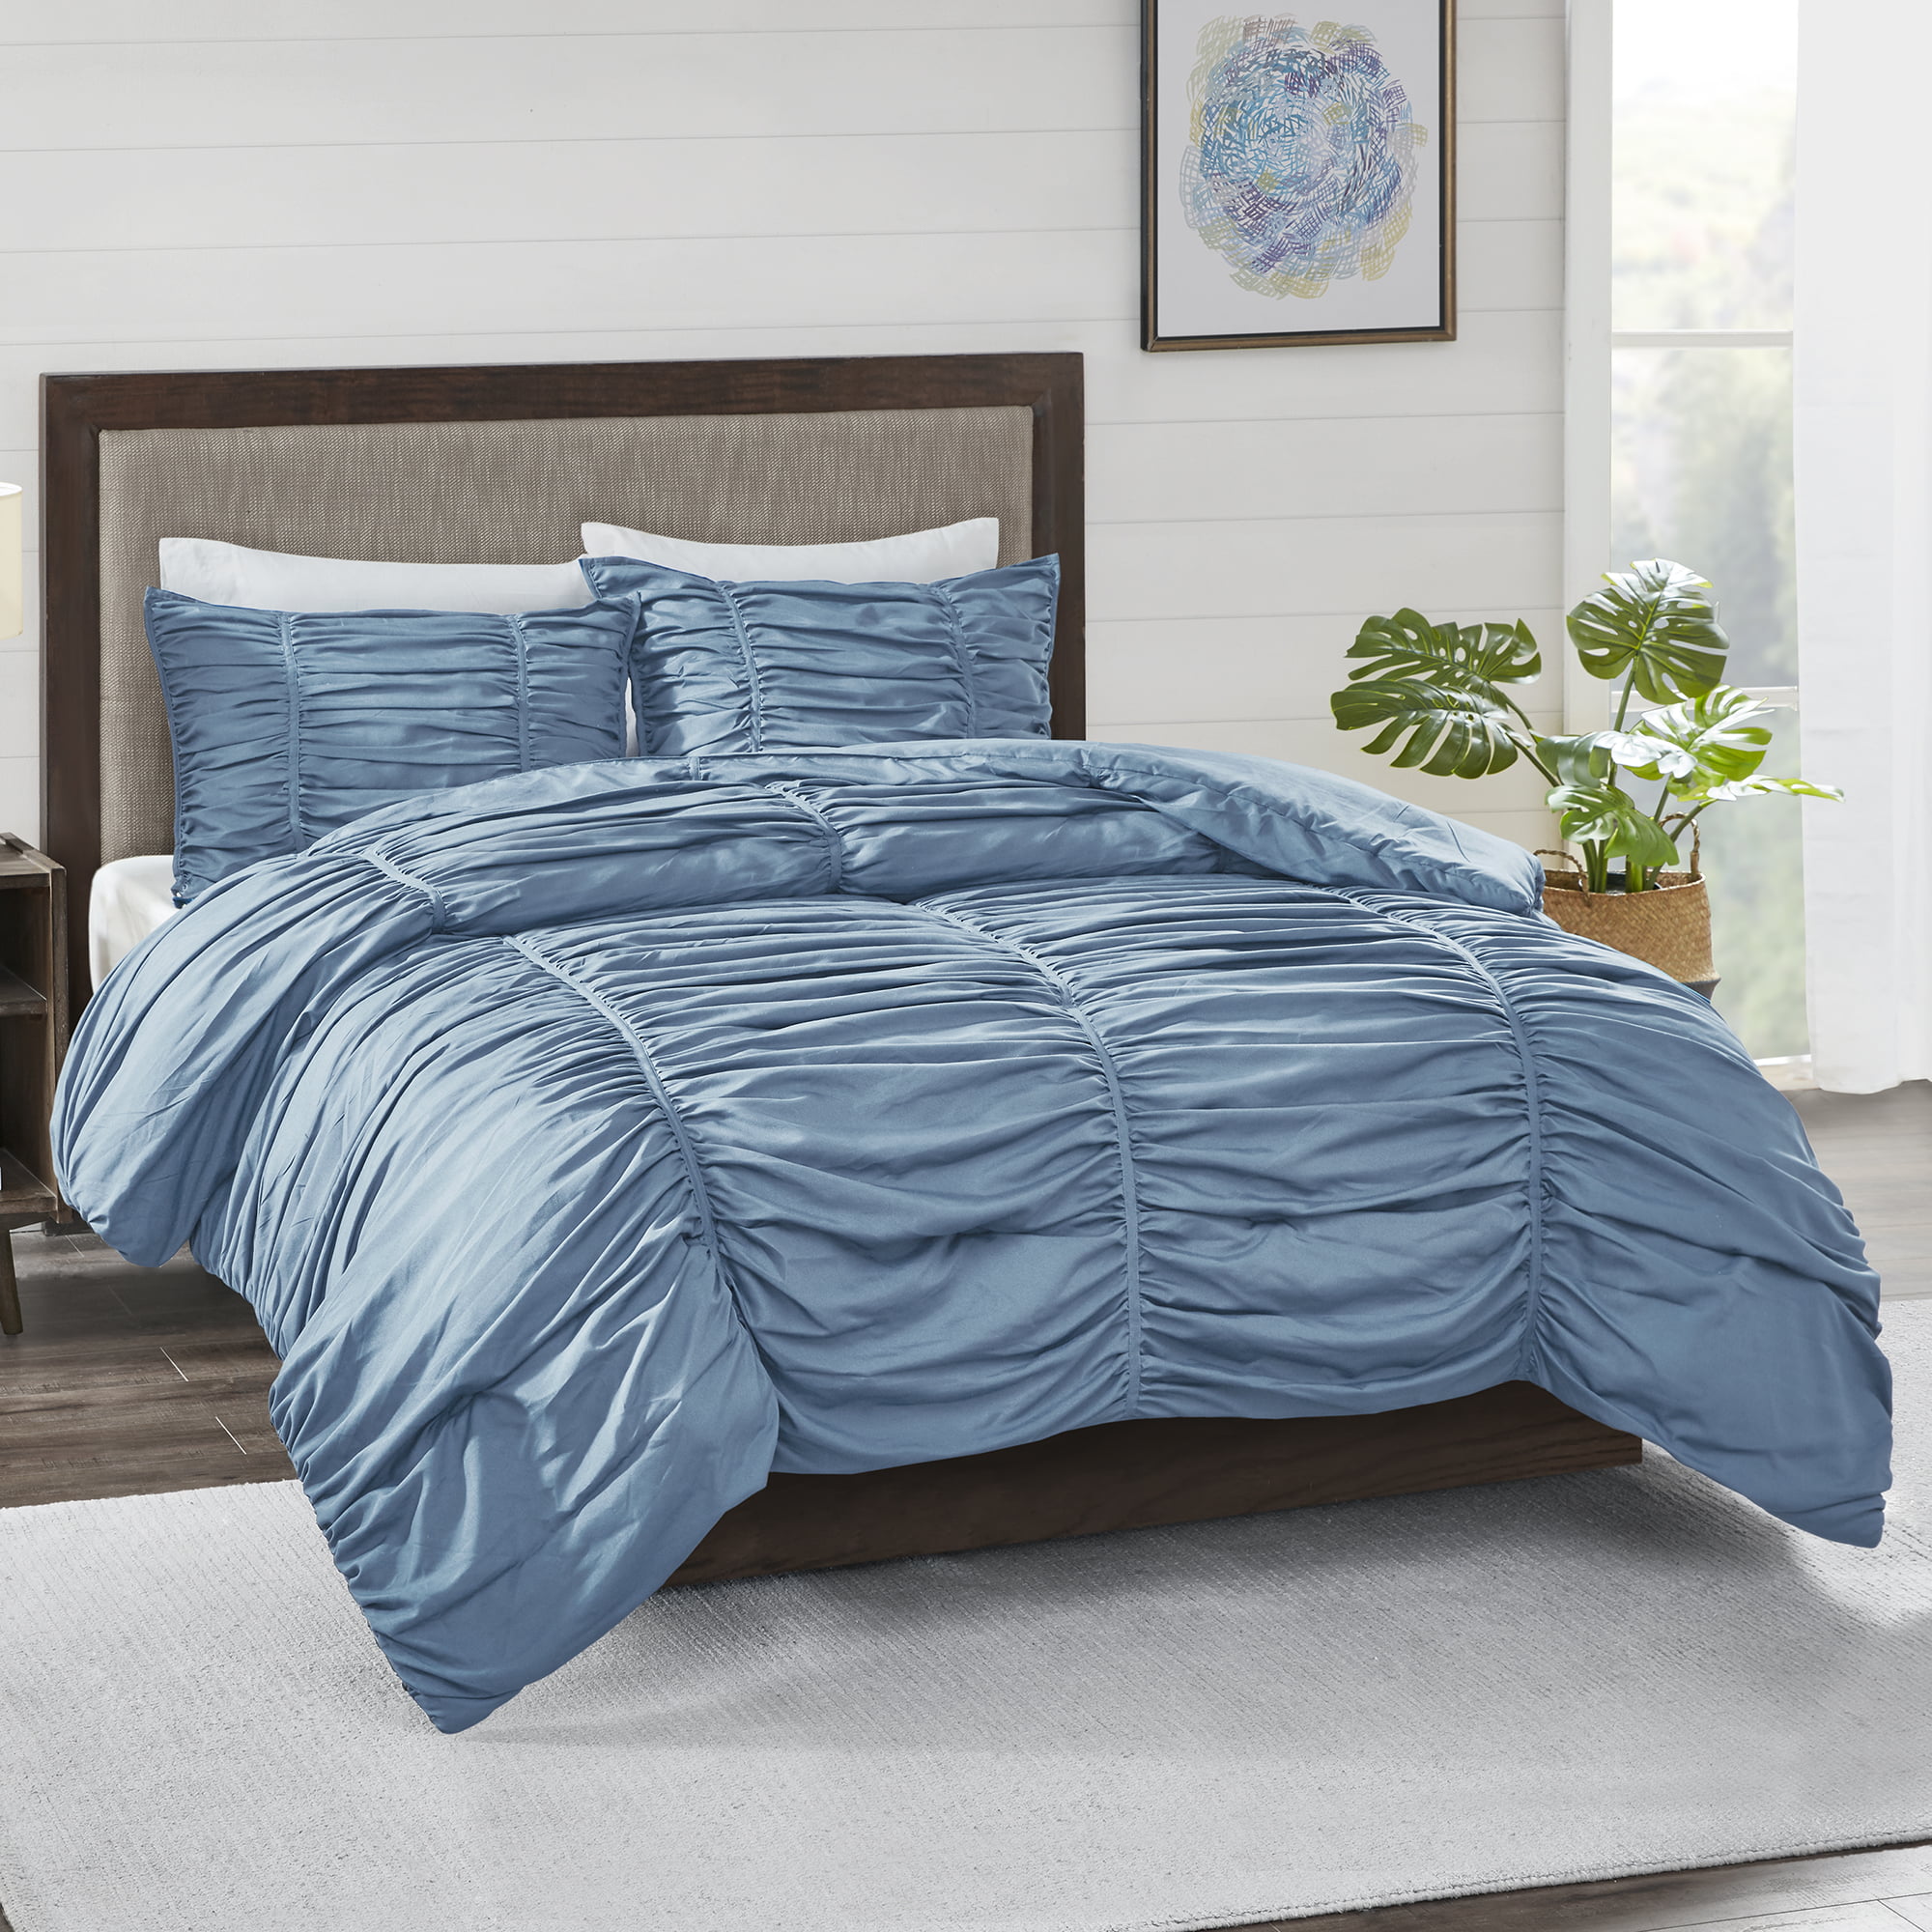 Better Homes and Gardens Jaden Ruched Light Blue 3Piece Comforter Set, Full/Queen